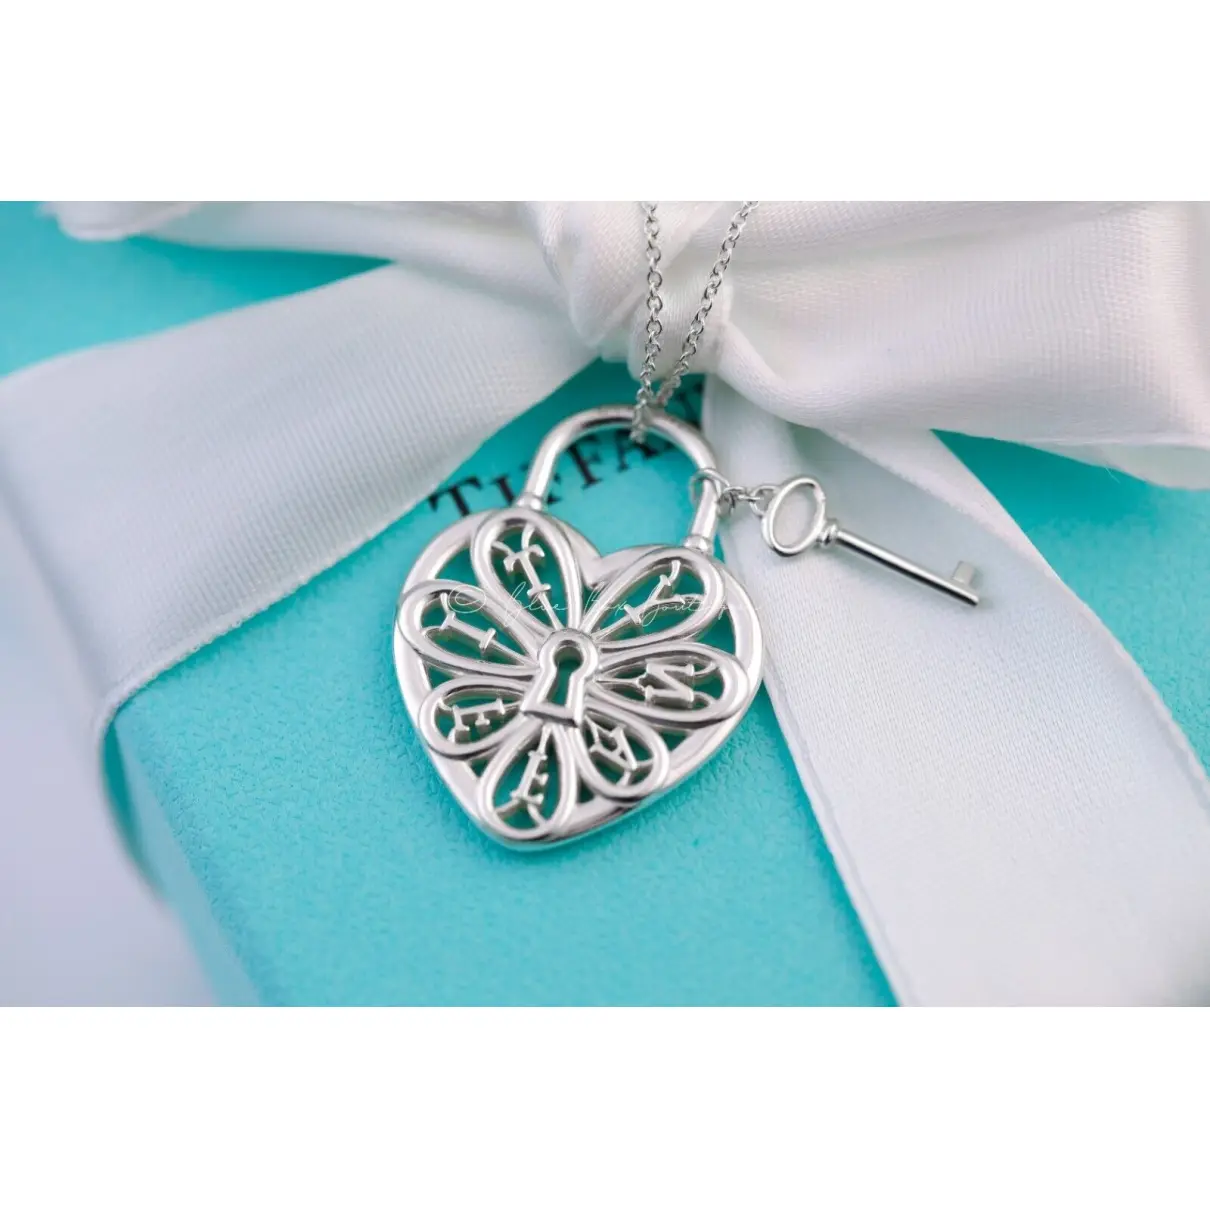 Buy Tiffany & Co Clés Tiffany silver necklace online